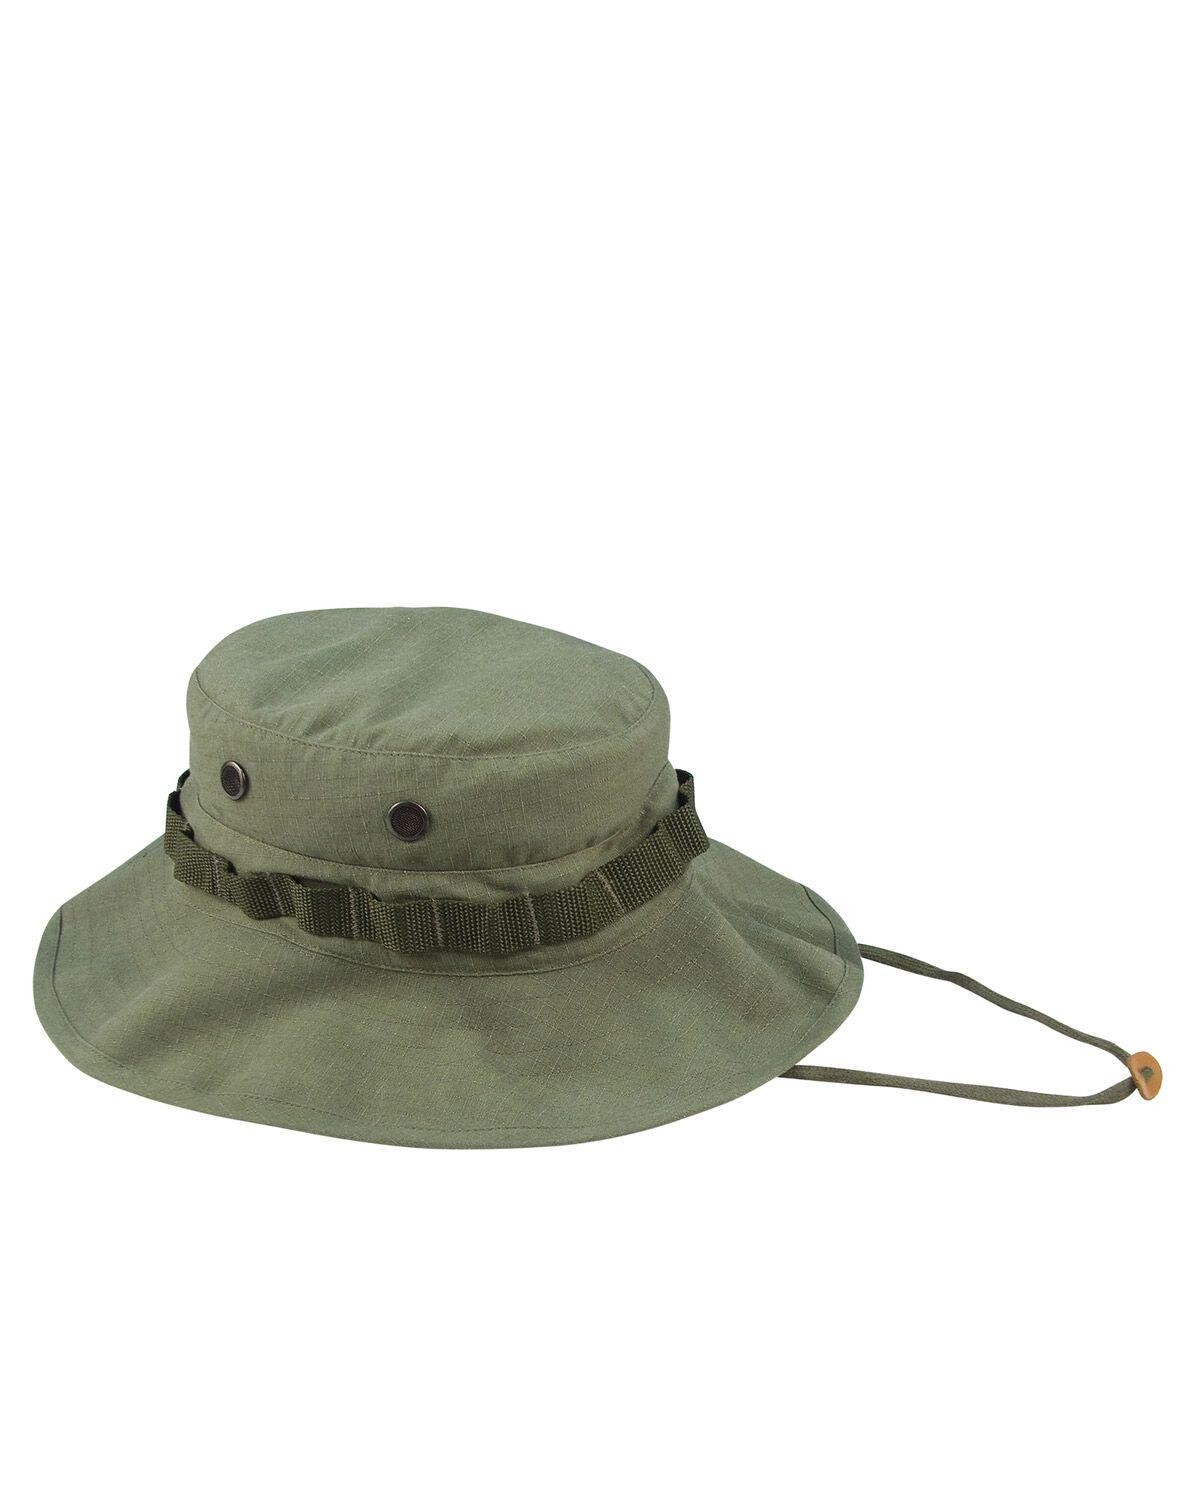 Rothco Vintage Boonie Hat - Vietnam-Style (Oliven, US 7.0 / EU 56 cm)